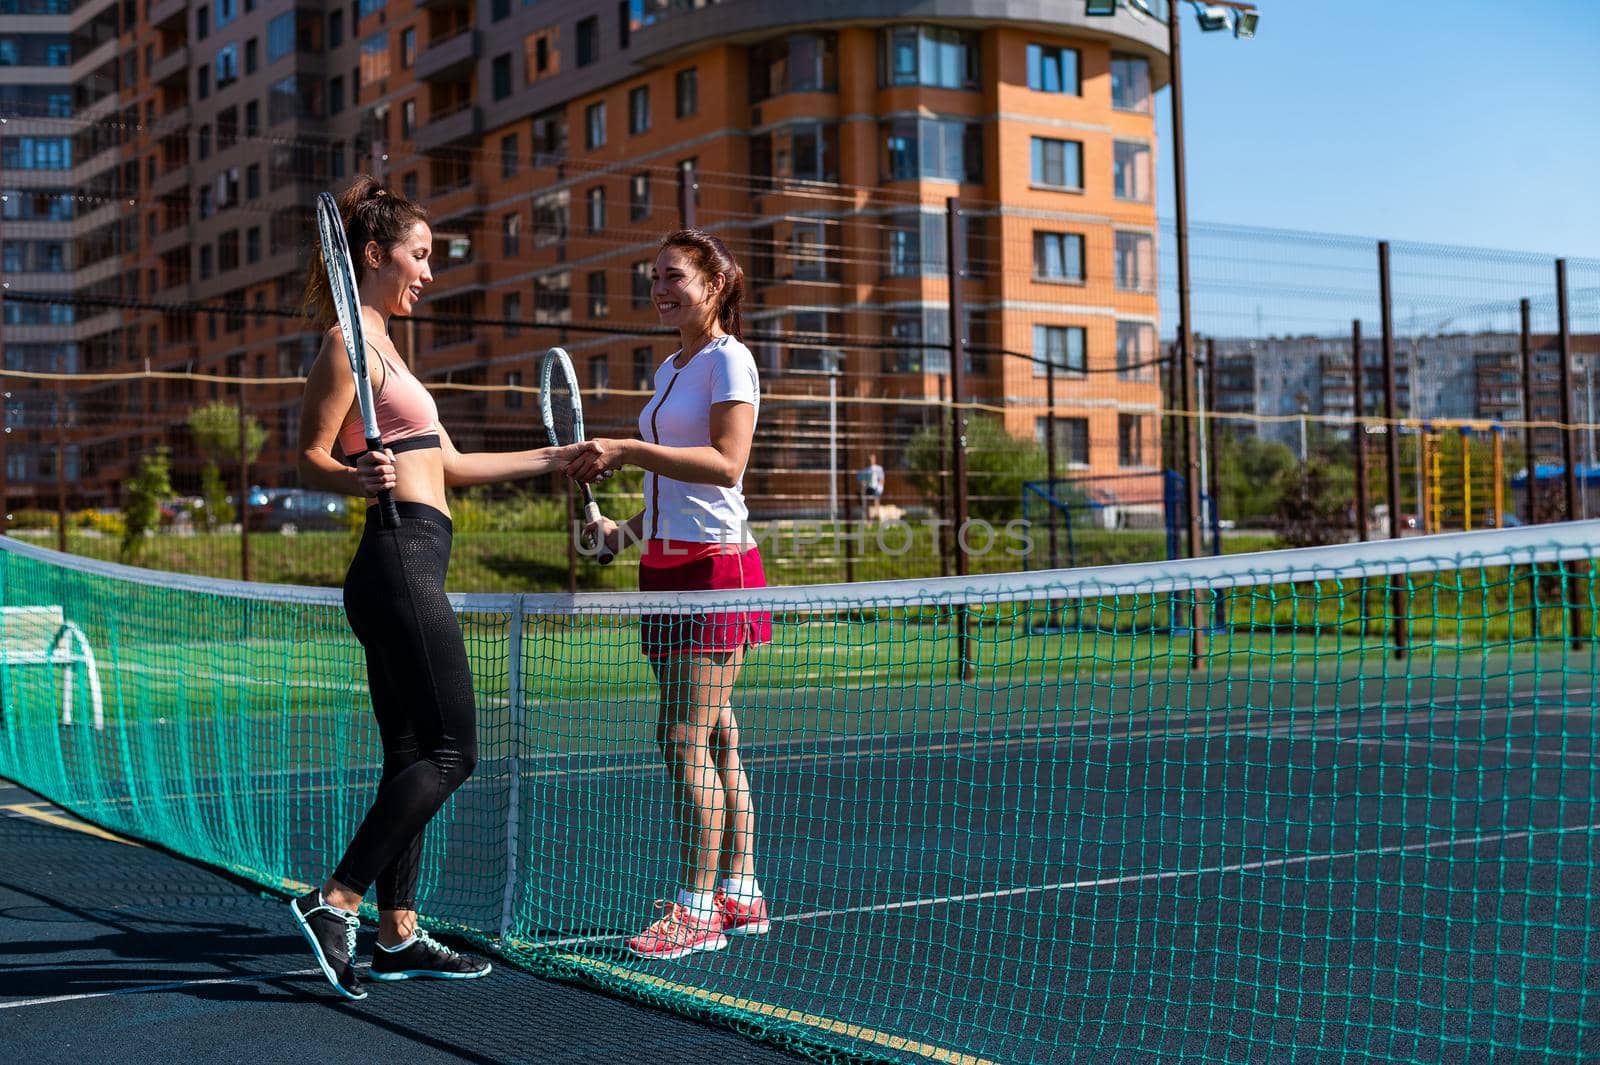 Two beautiful caucasian women in sportswear shake hands before a tennis match on an outdoor court